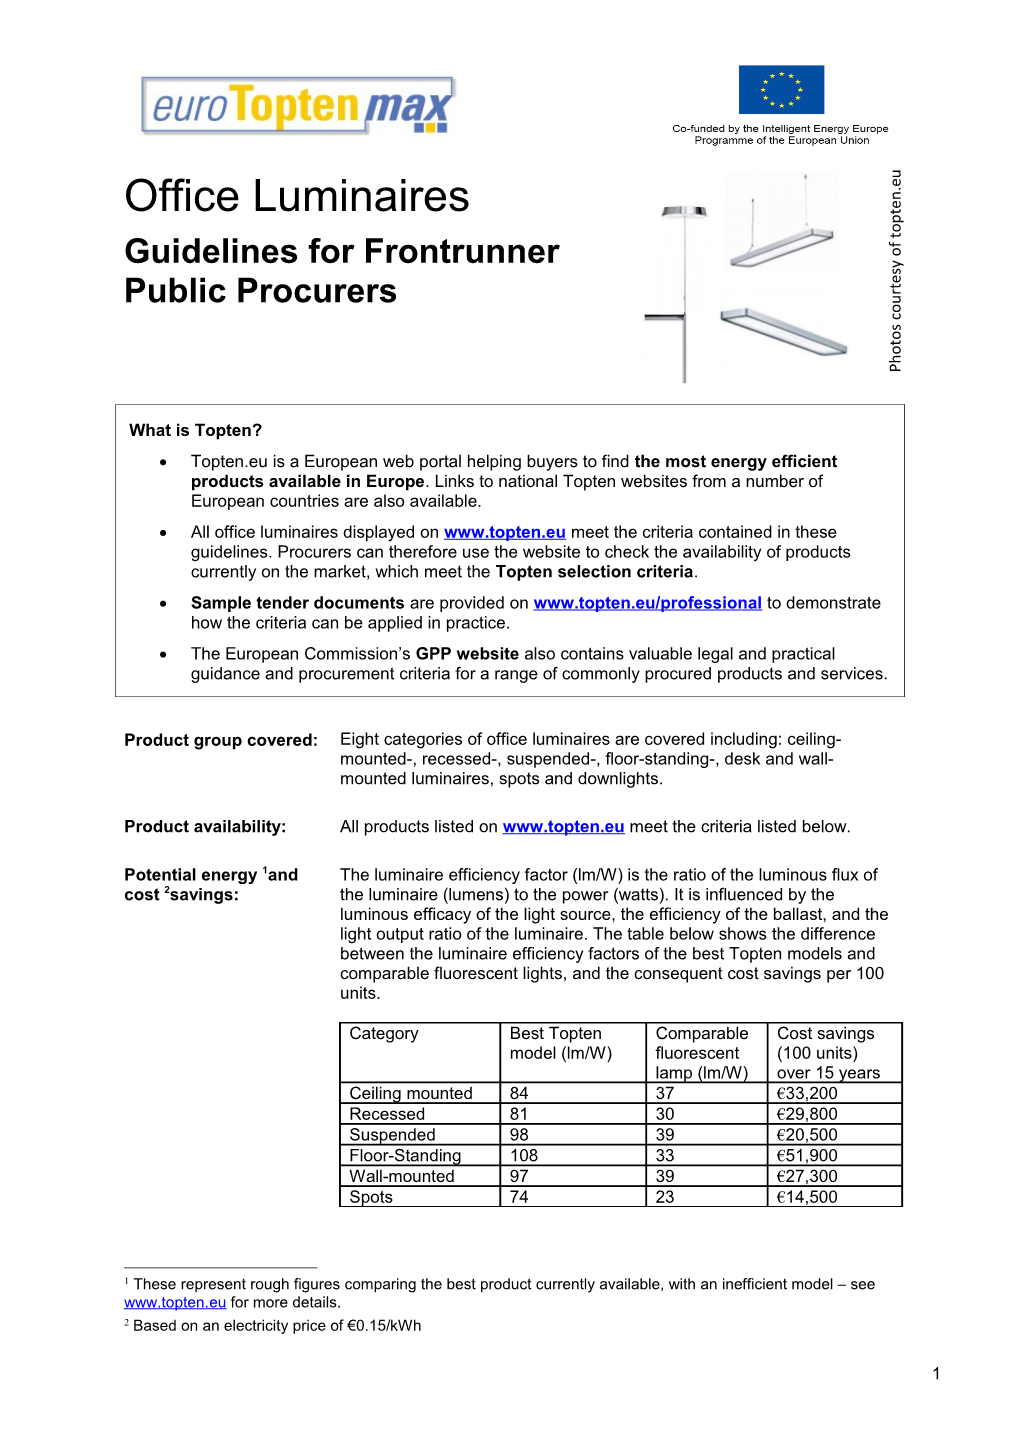 Procurement Criteria Updated: April 2014